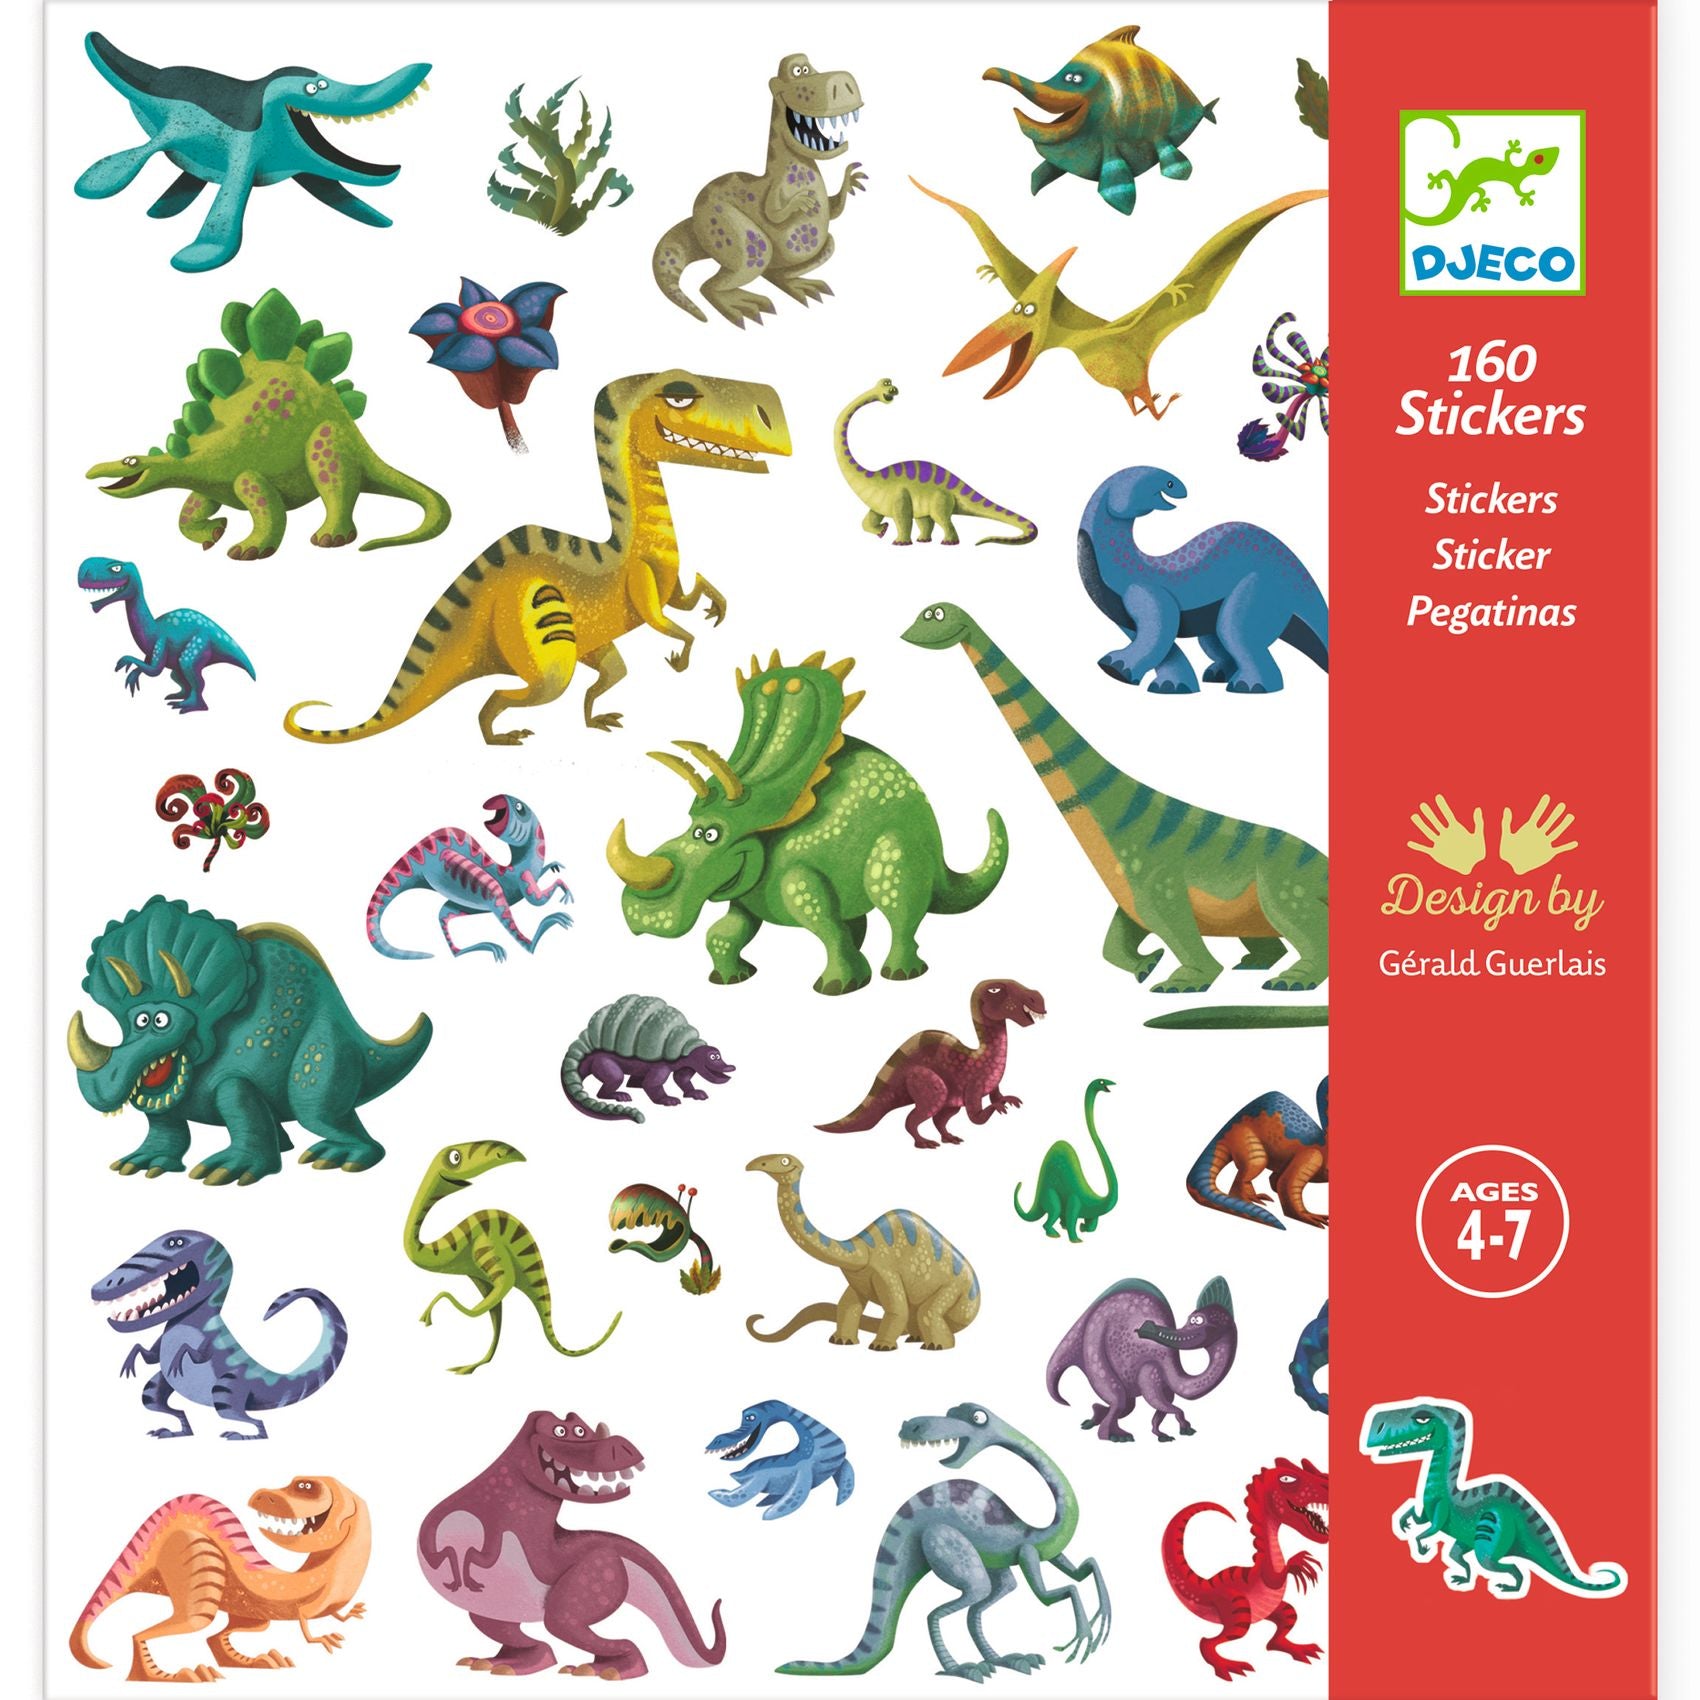 Dinosaur Themed Stickers